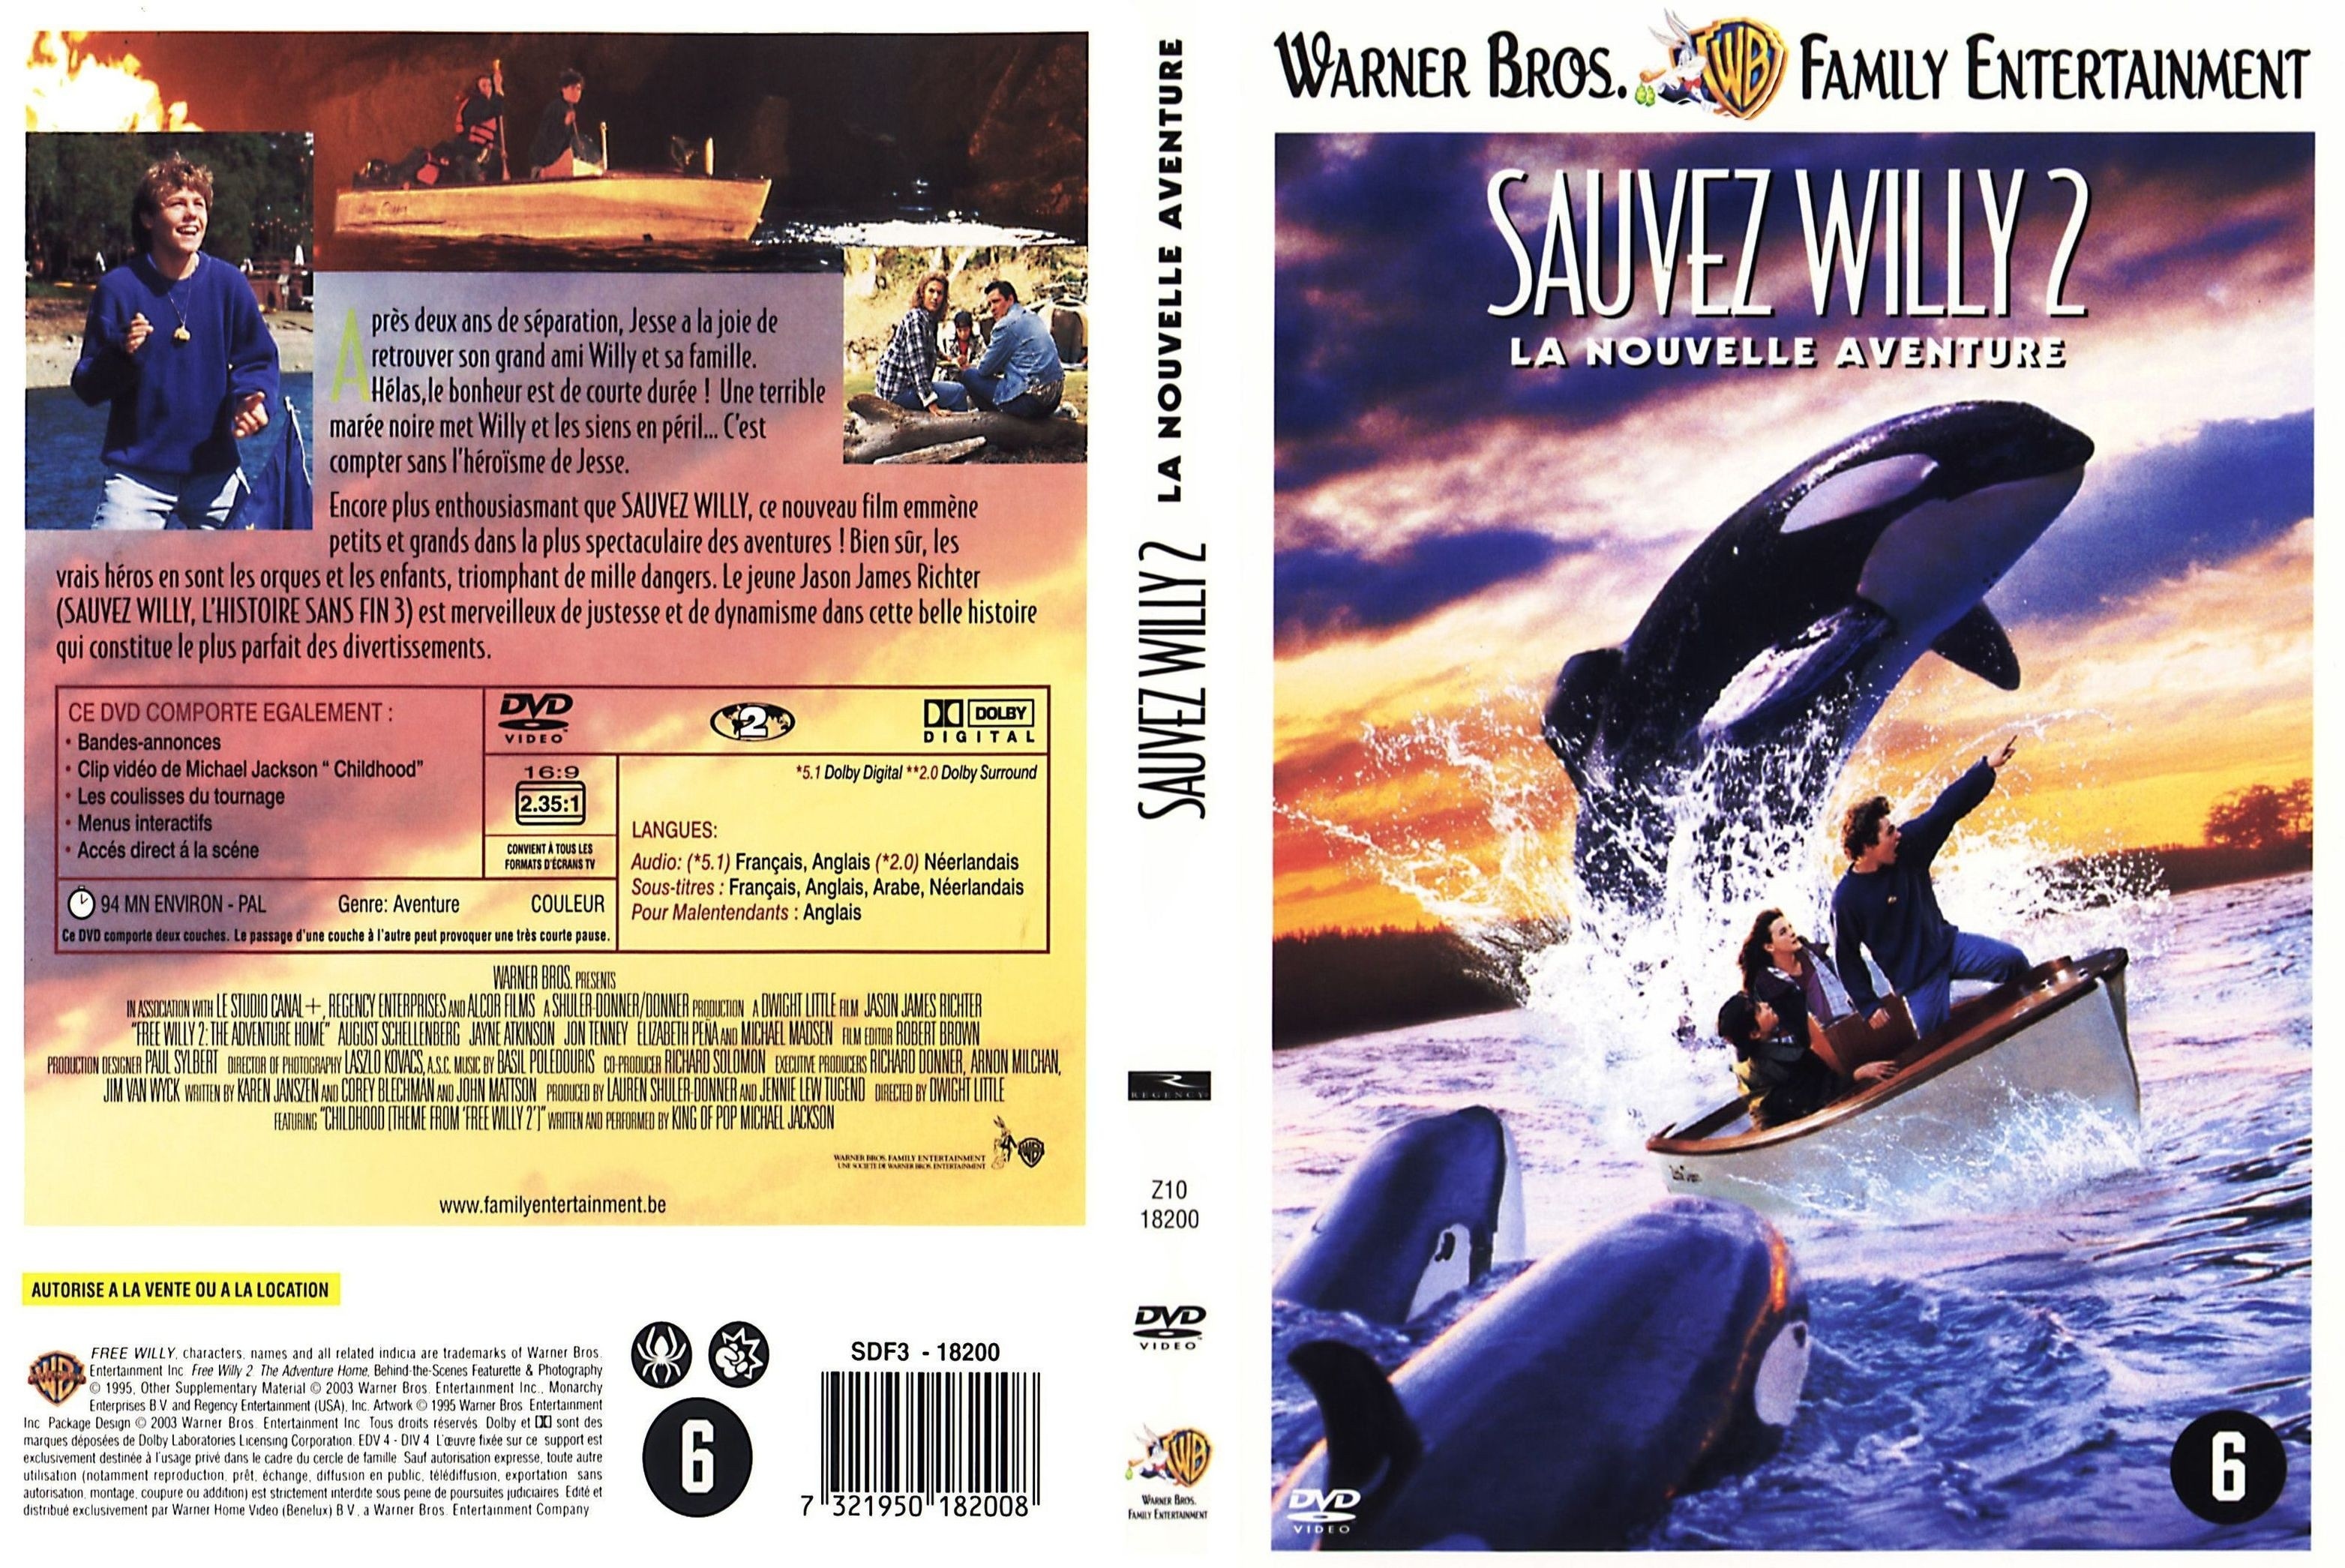 Jaquette DVD Sauvez Willy 2 v2